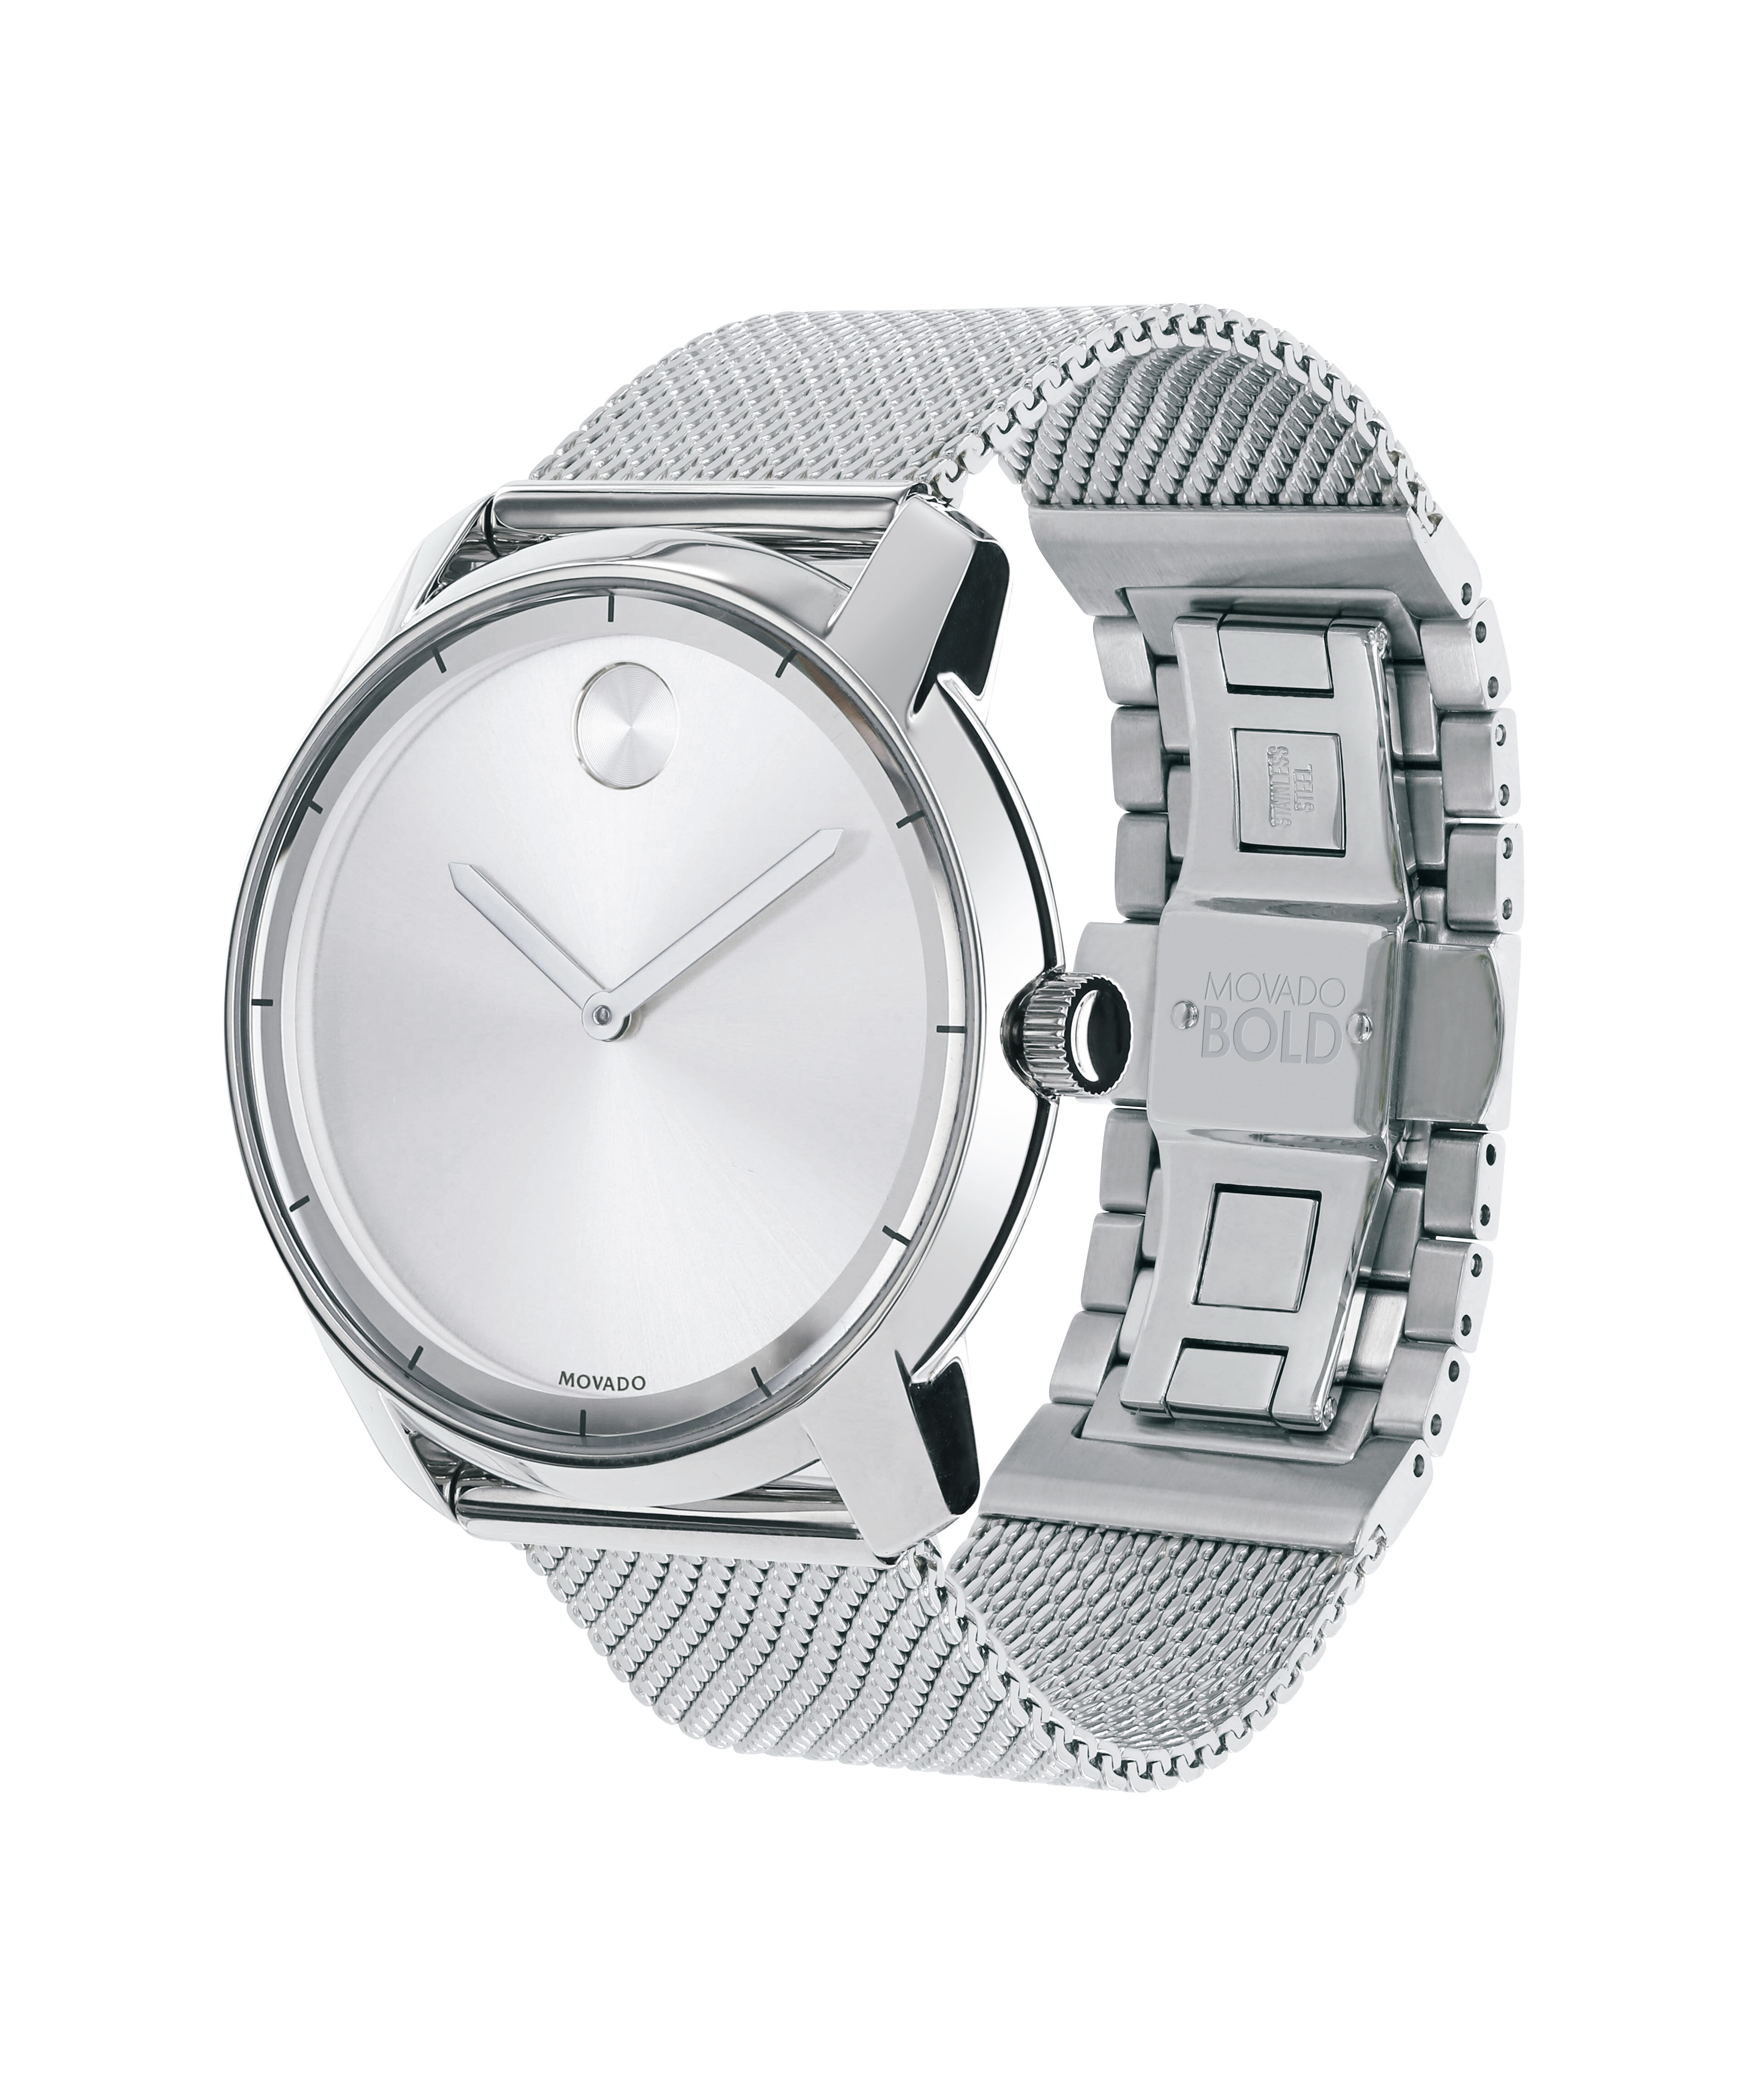 Replica Luxury Watches For Men